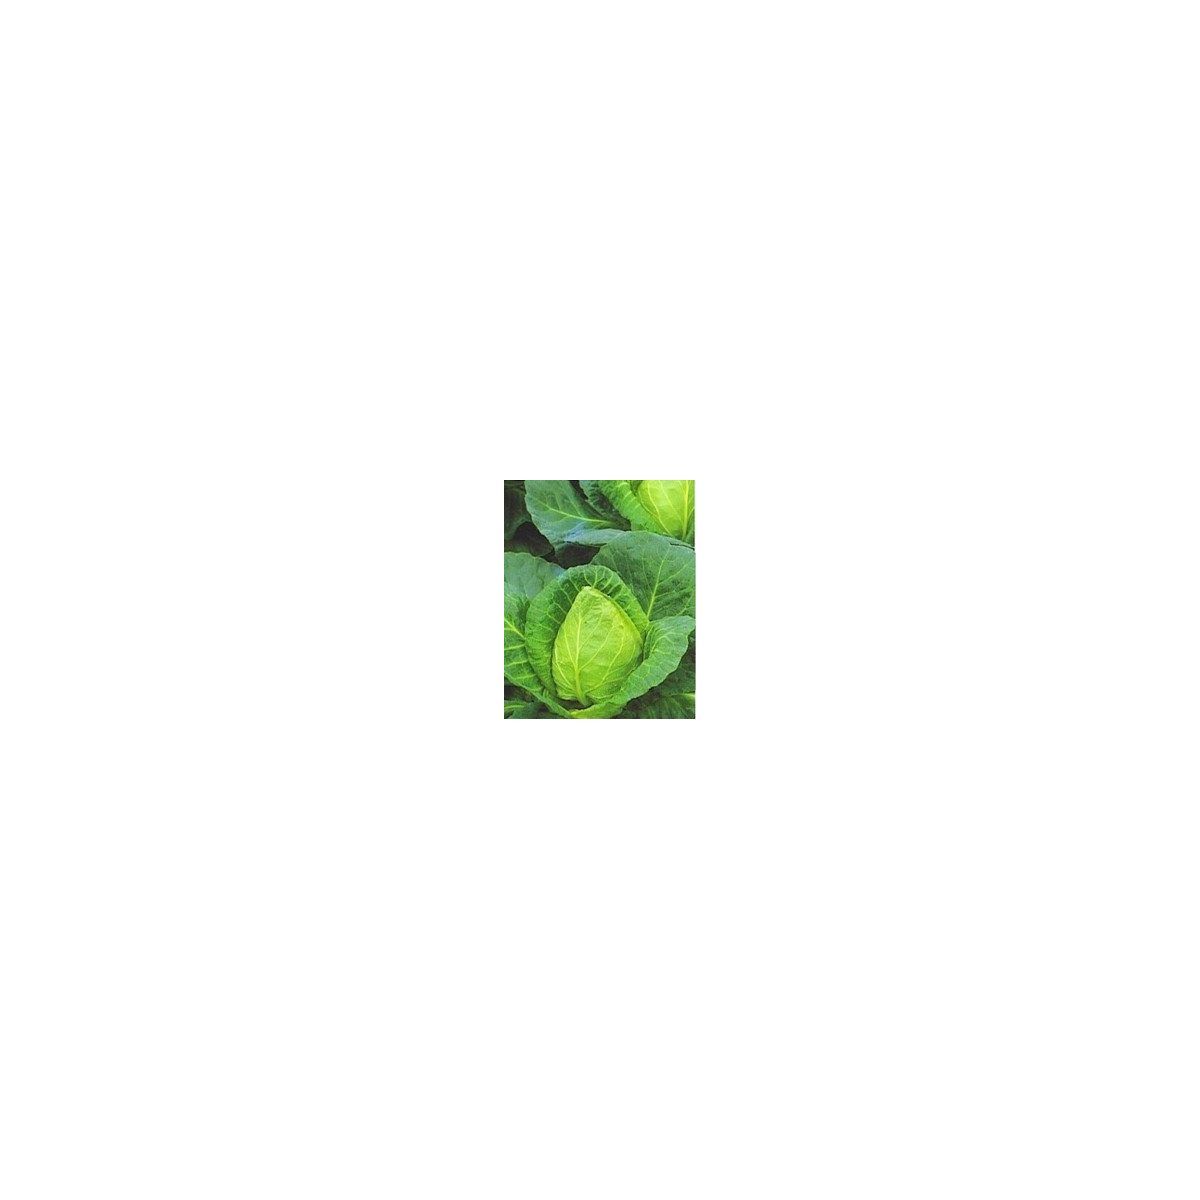 Zelí bílé velmi rané - Brassica oleracea - semena - 0,8 g